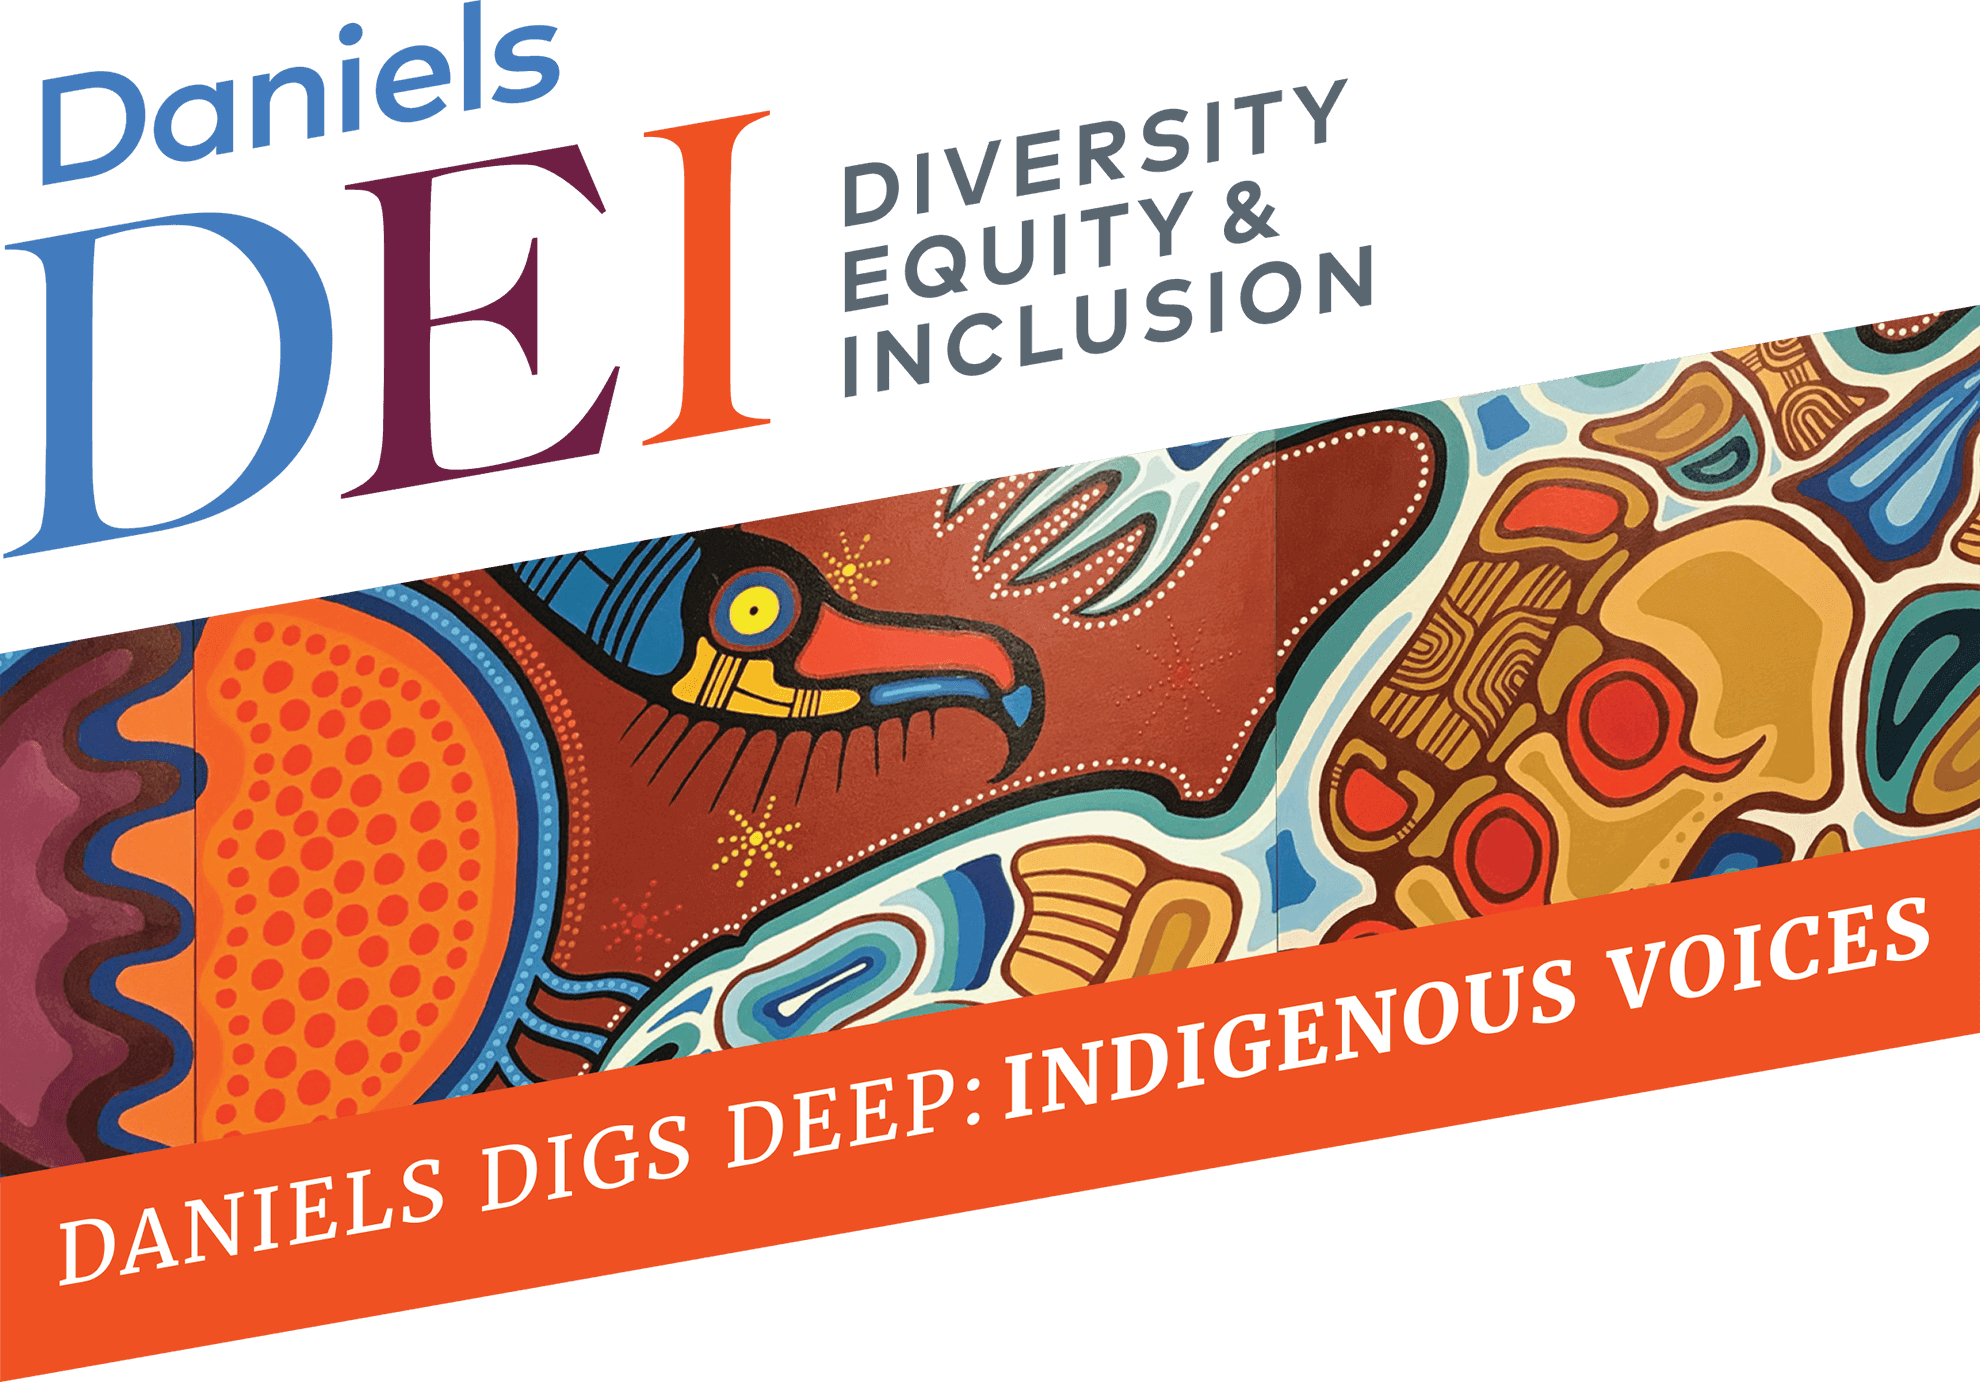 Daniels Diversity, Equality & Inclusion - Daniels digs deep indigenous voices logo